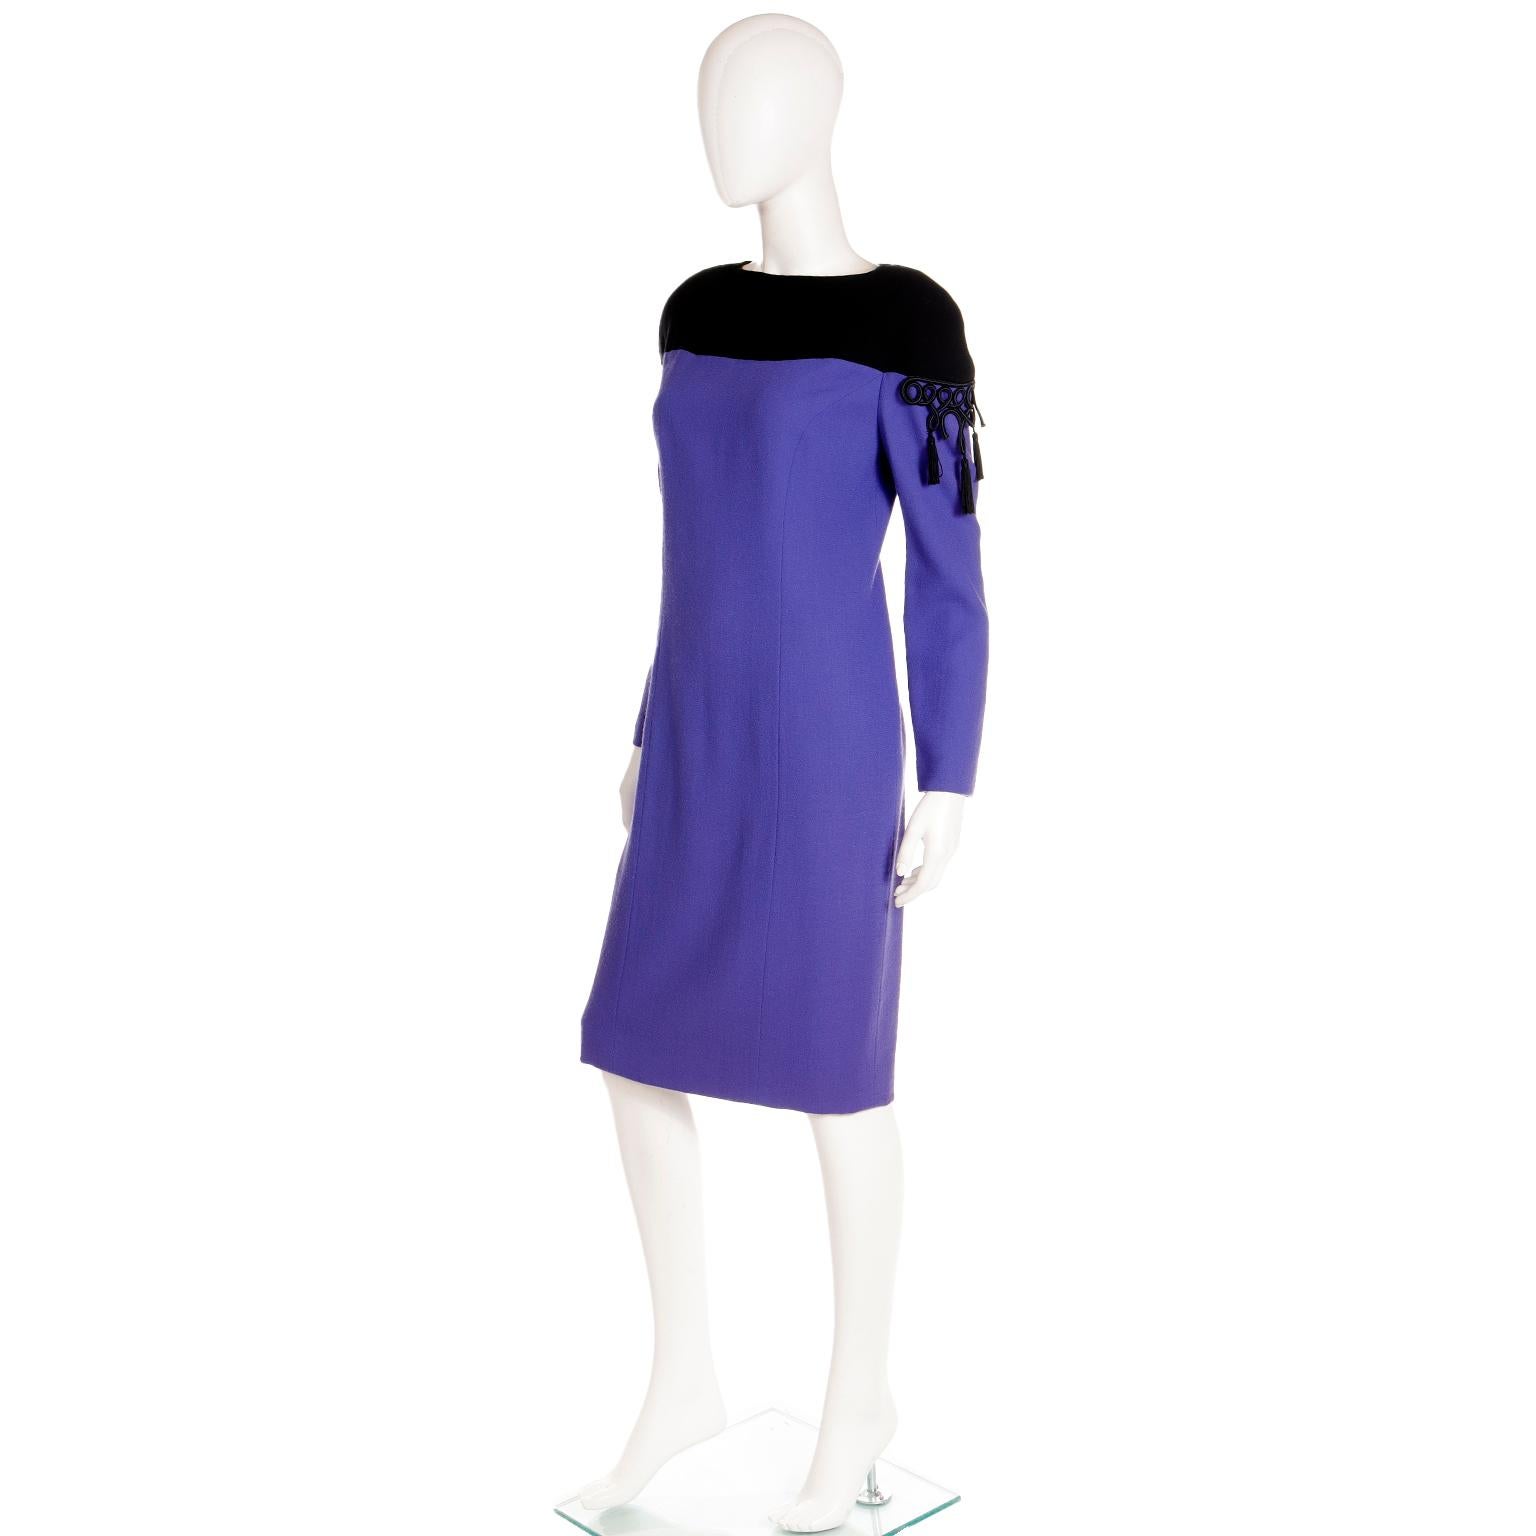 Vintage 1980s Bob Mackie Purple Dress With Black Tassels & Braid 1